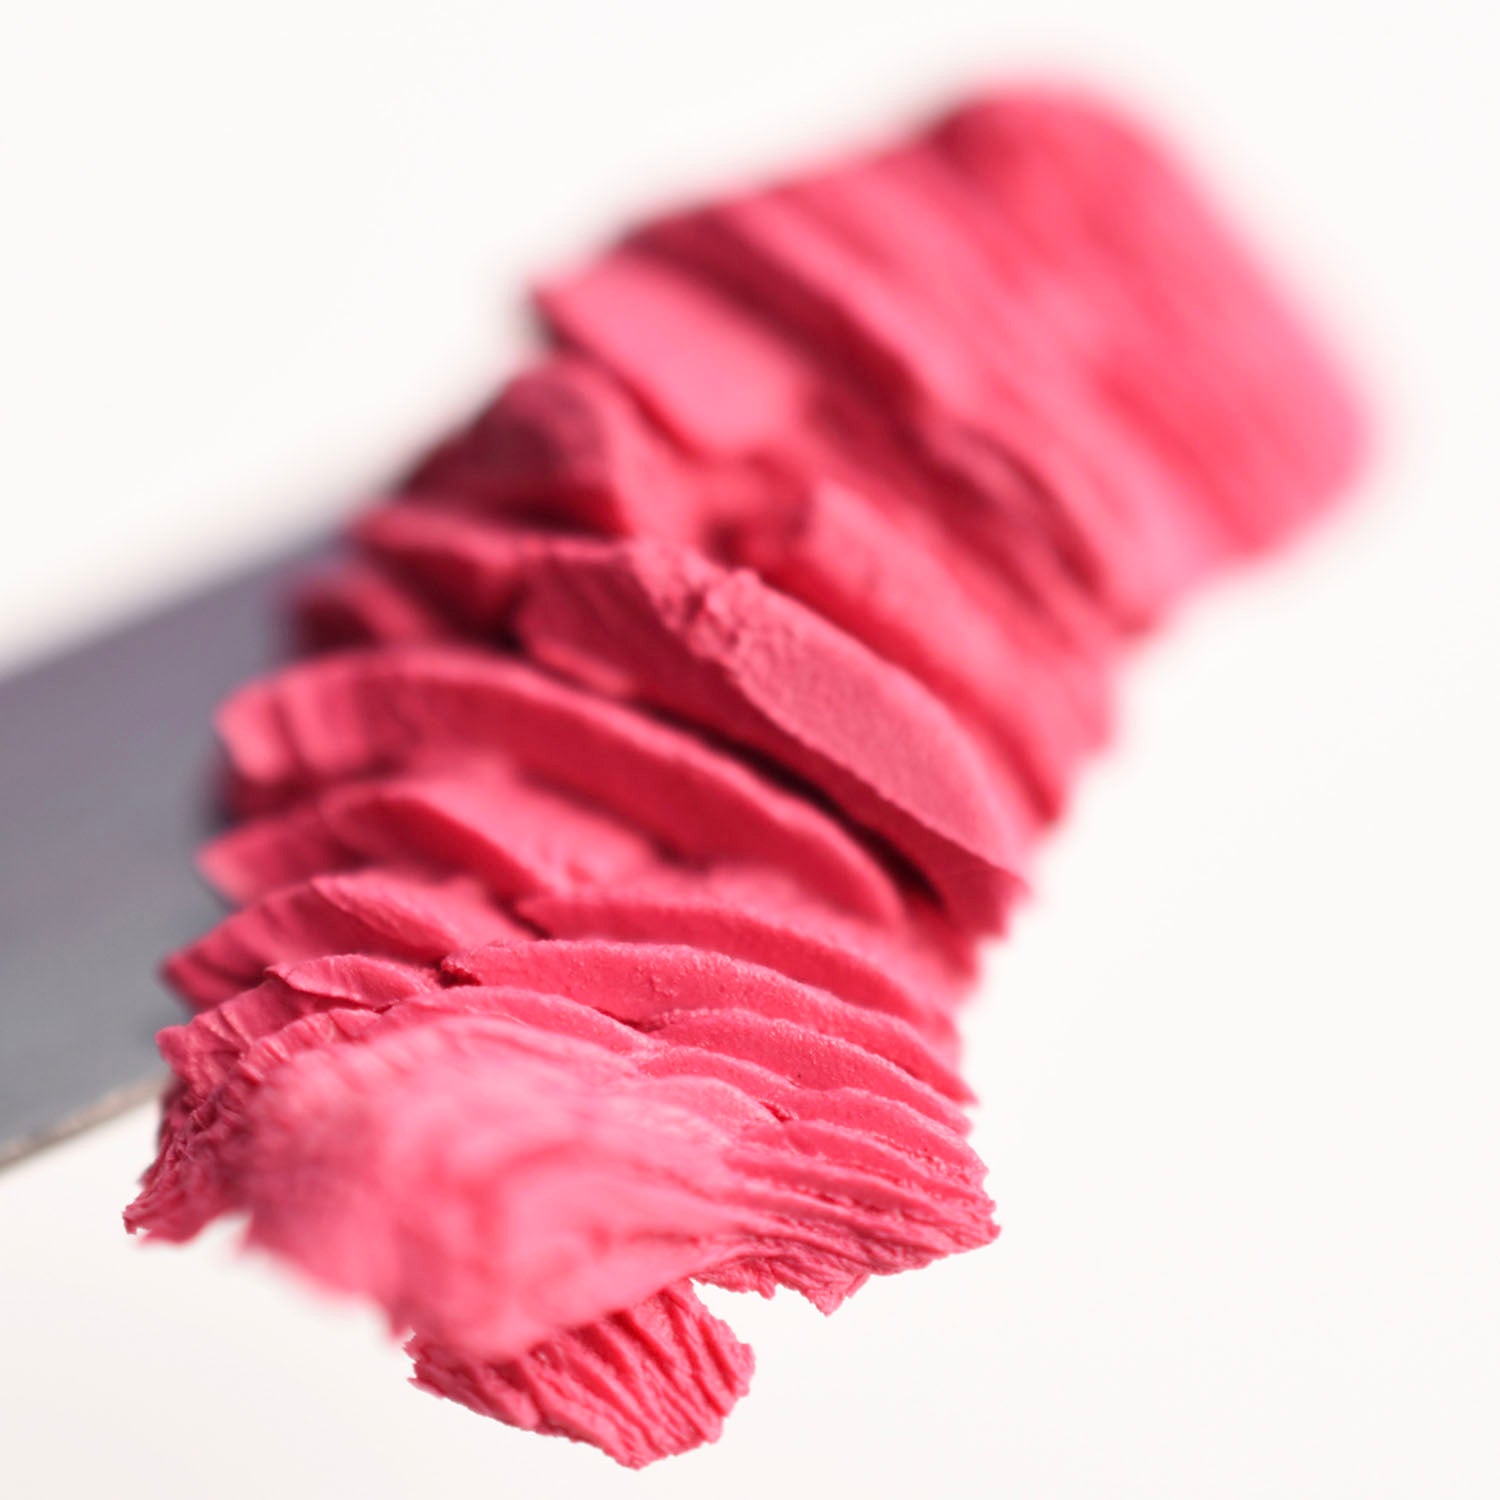 erato's lip and cheek balm - rose pink